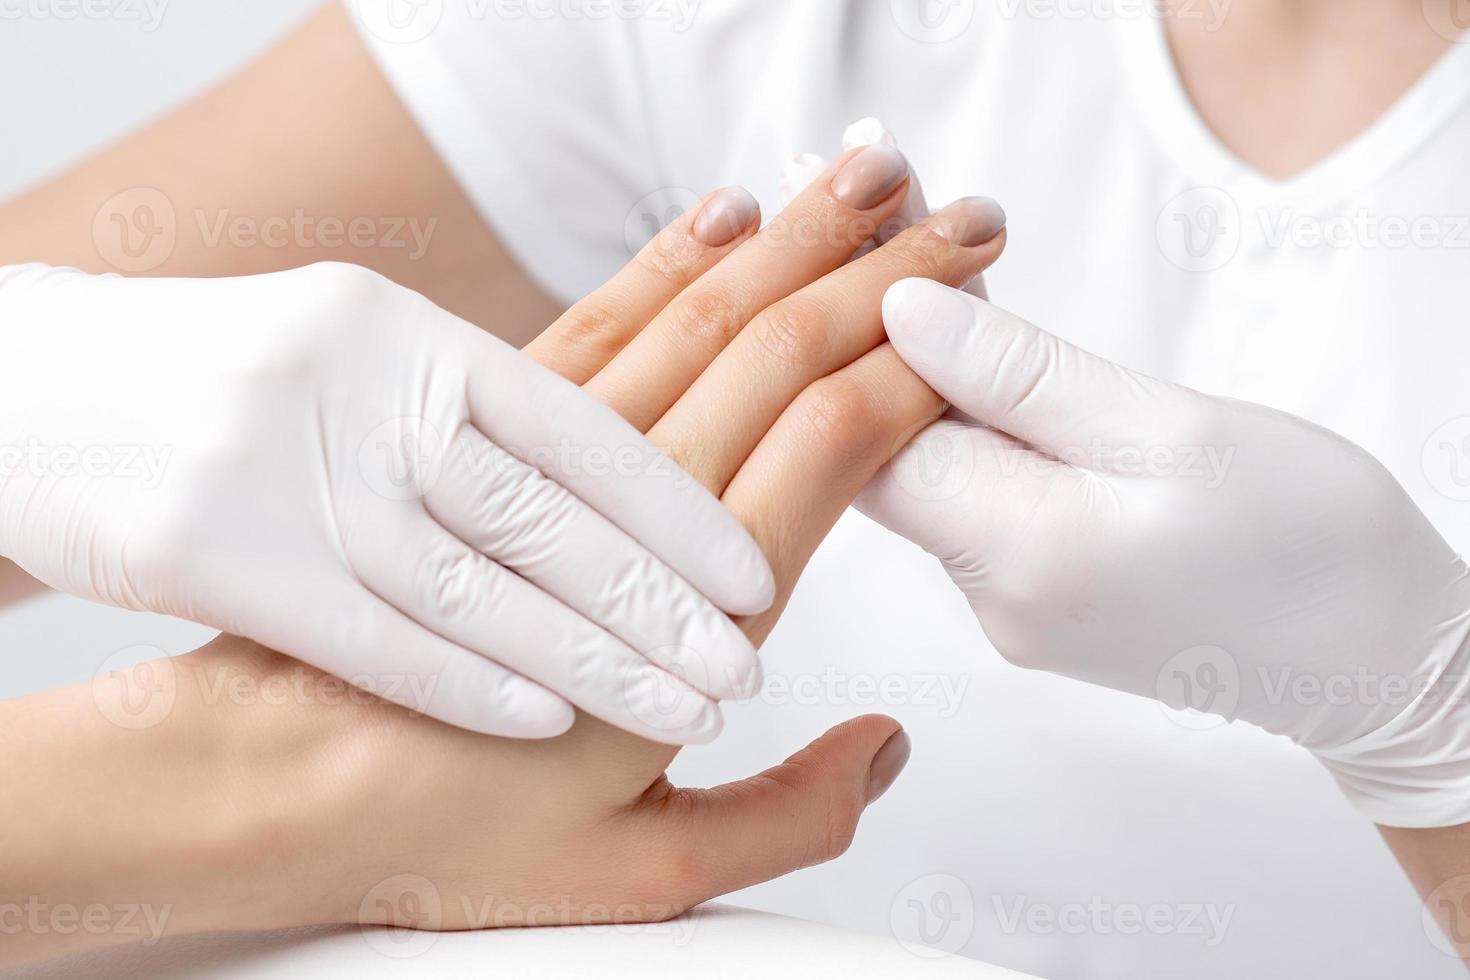 mains humaines tenant des ongles féminins photo